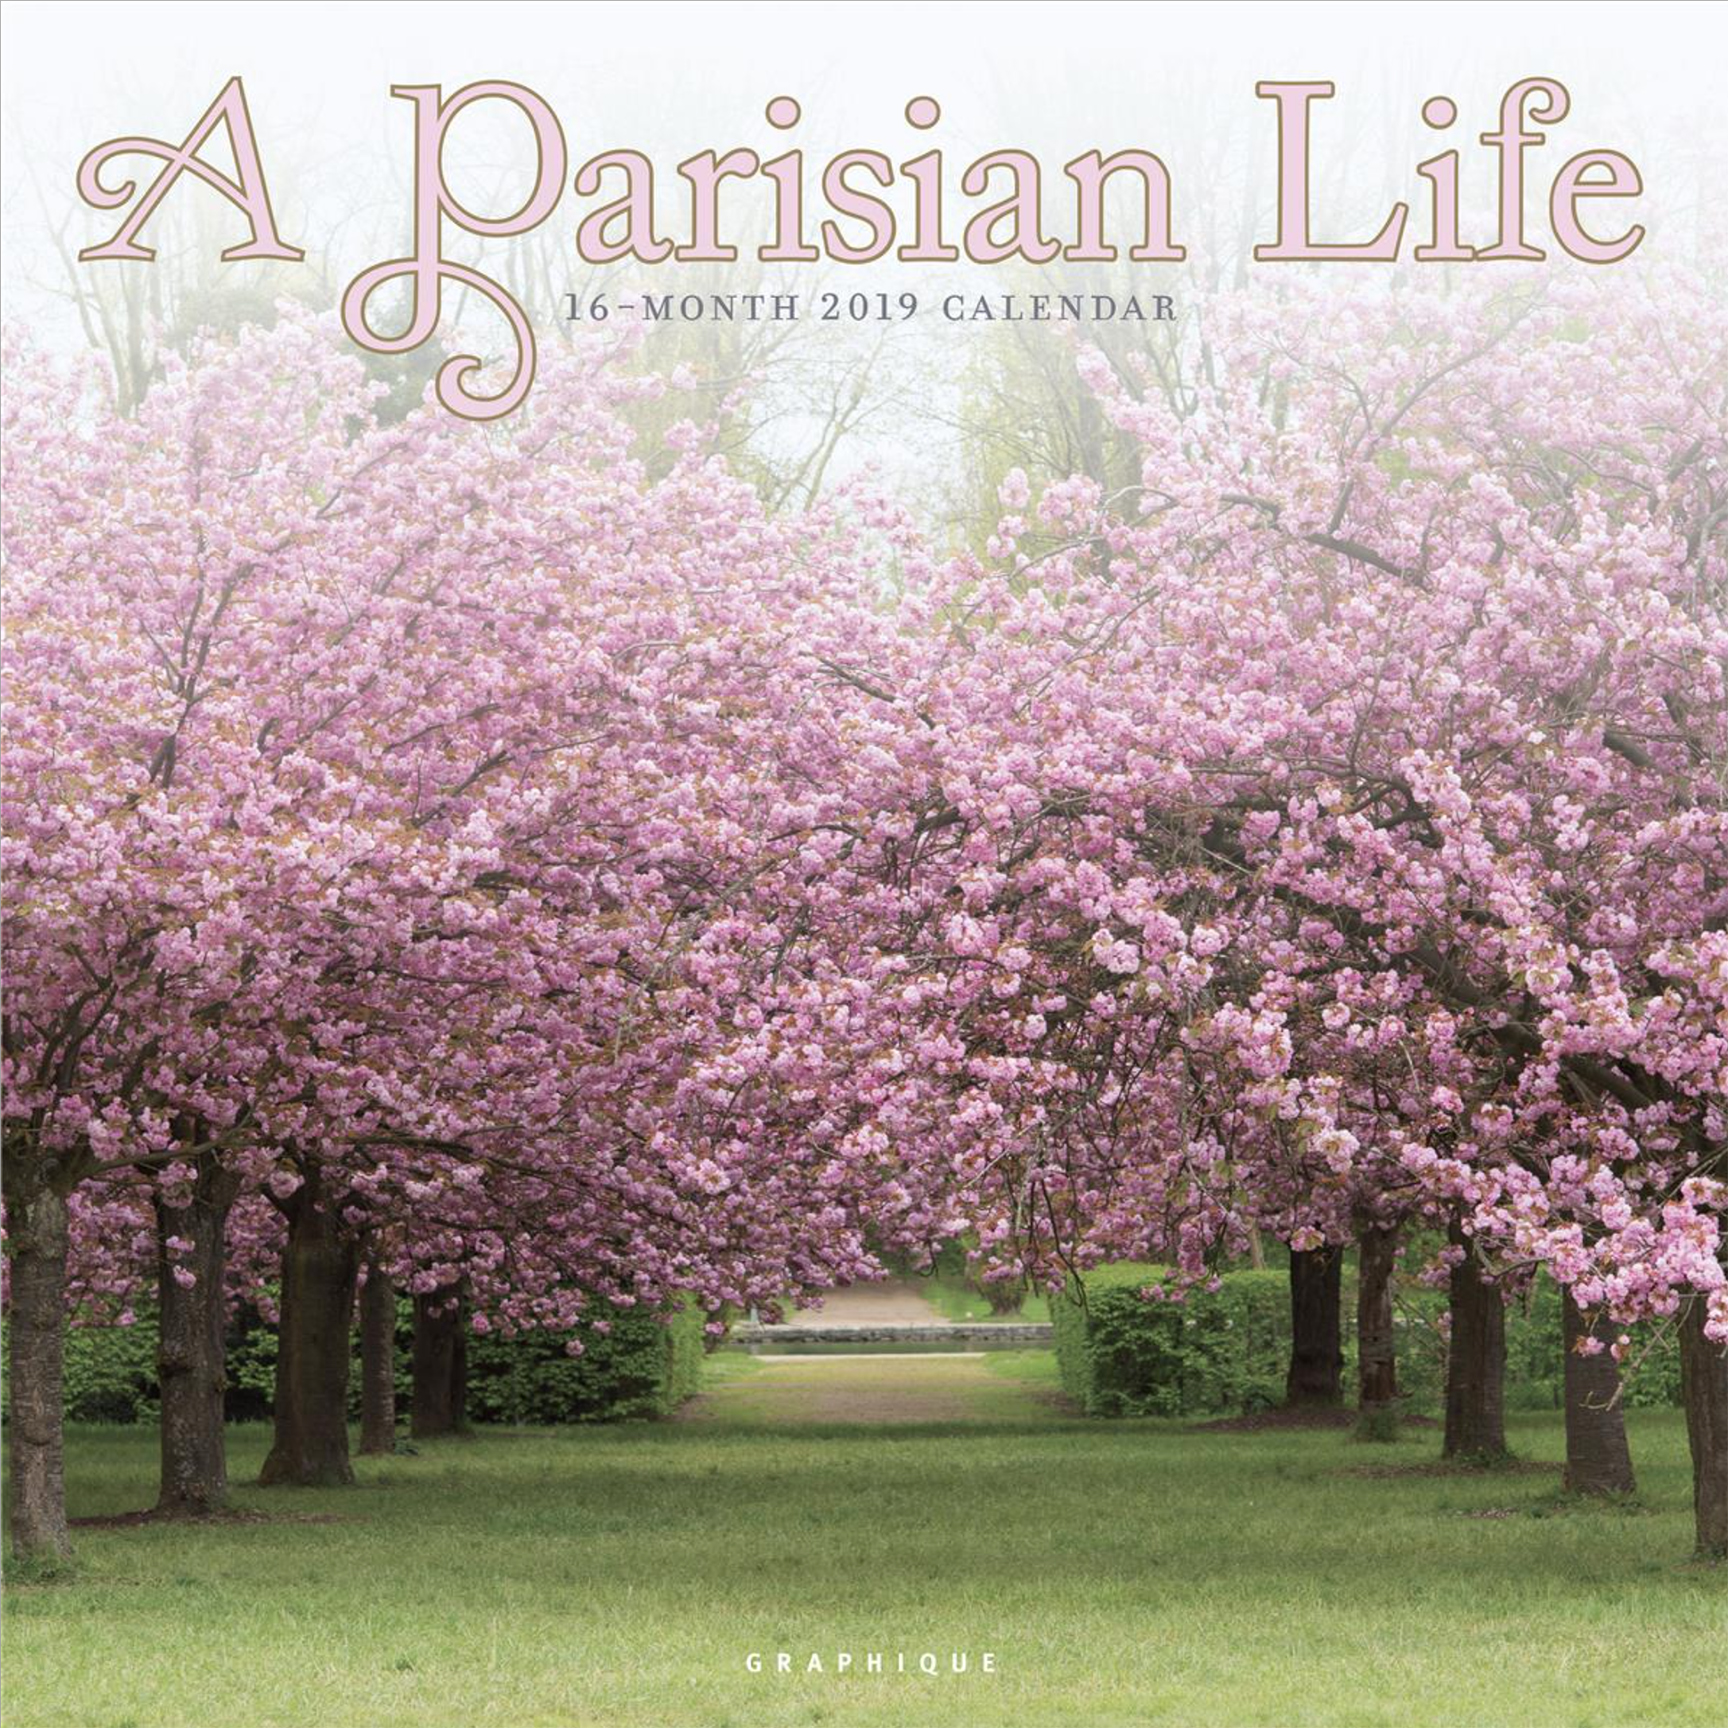 A Parisian Life 2019 Calendar by Georgianna Lane